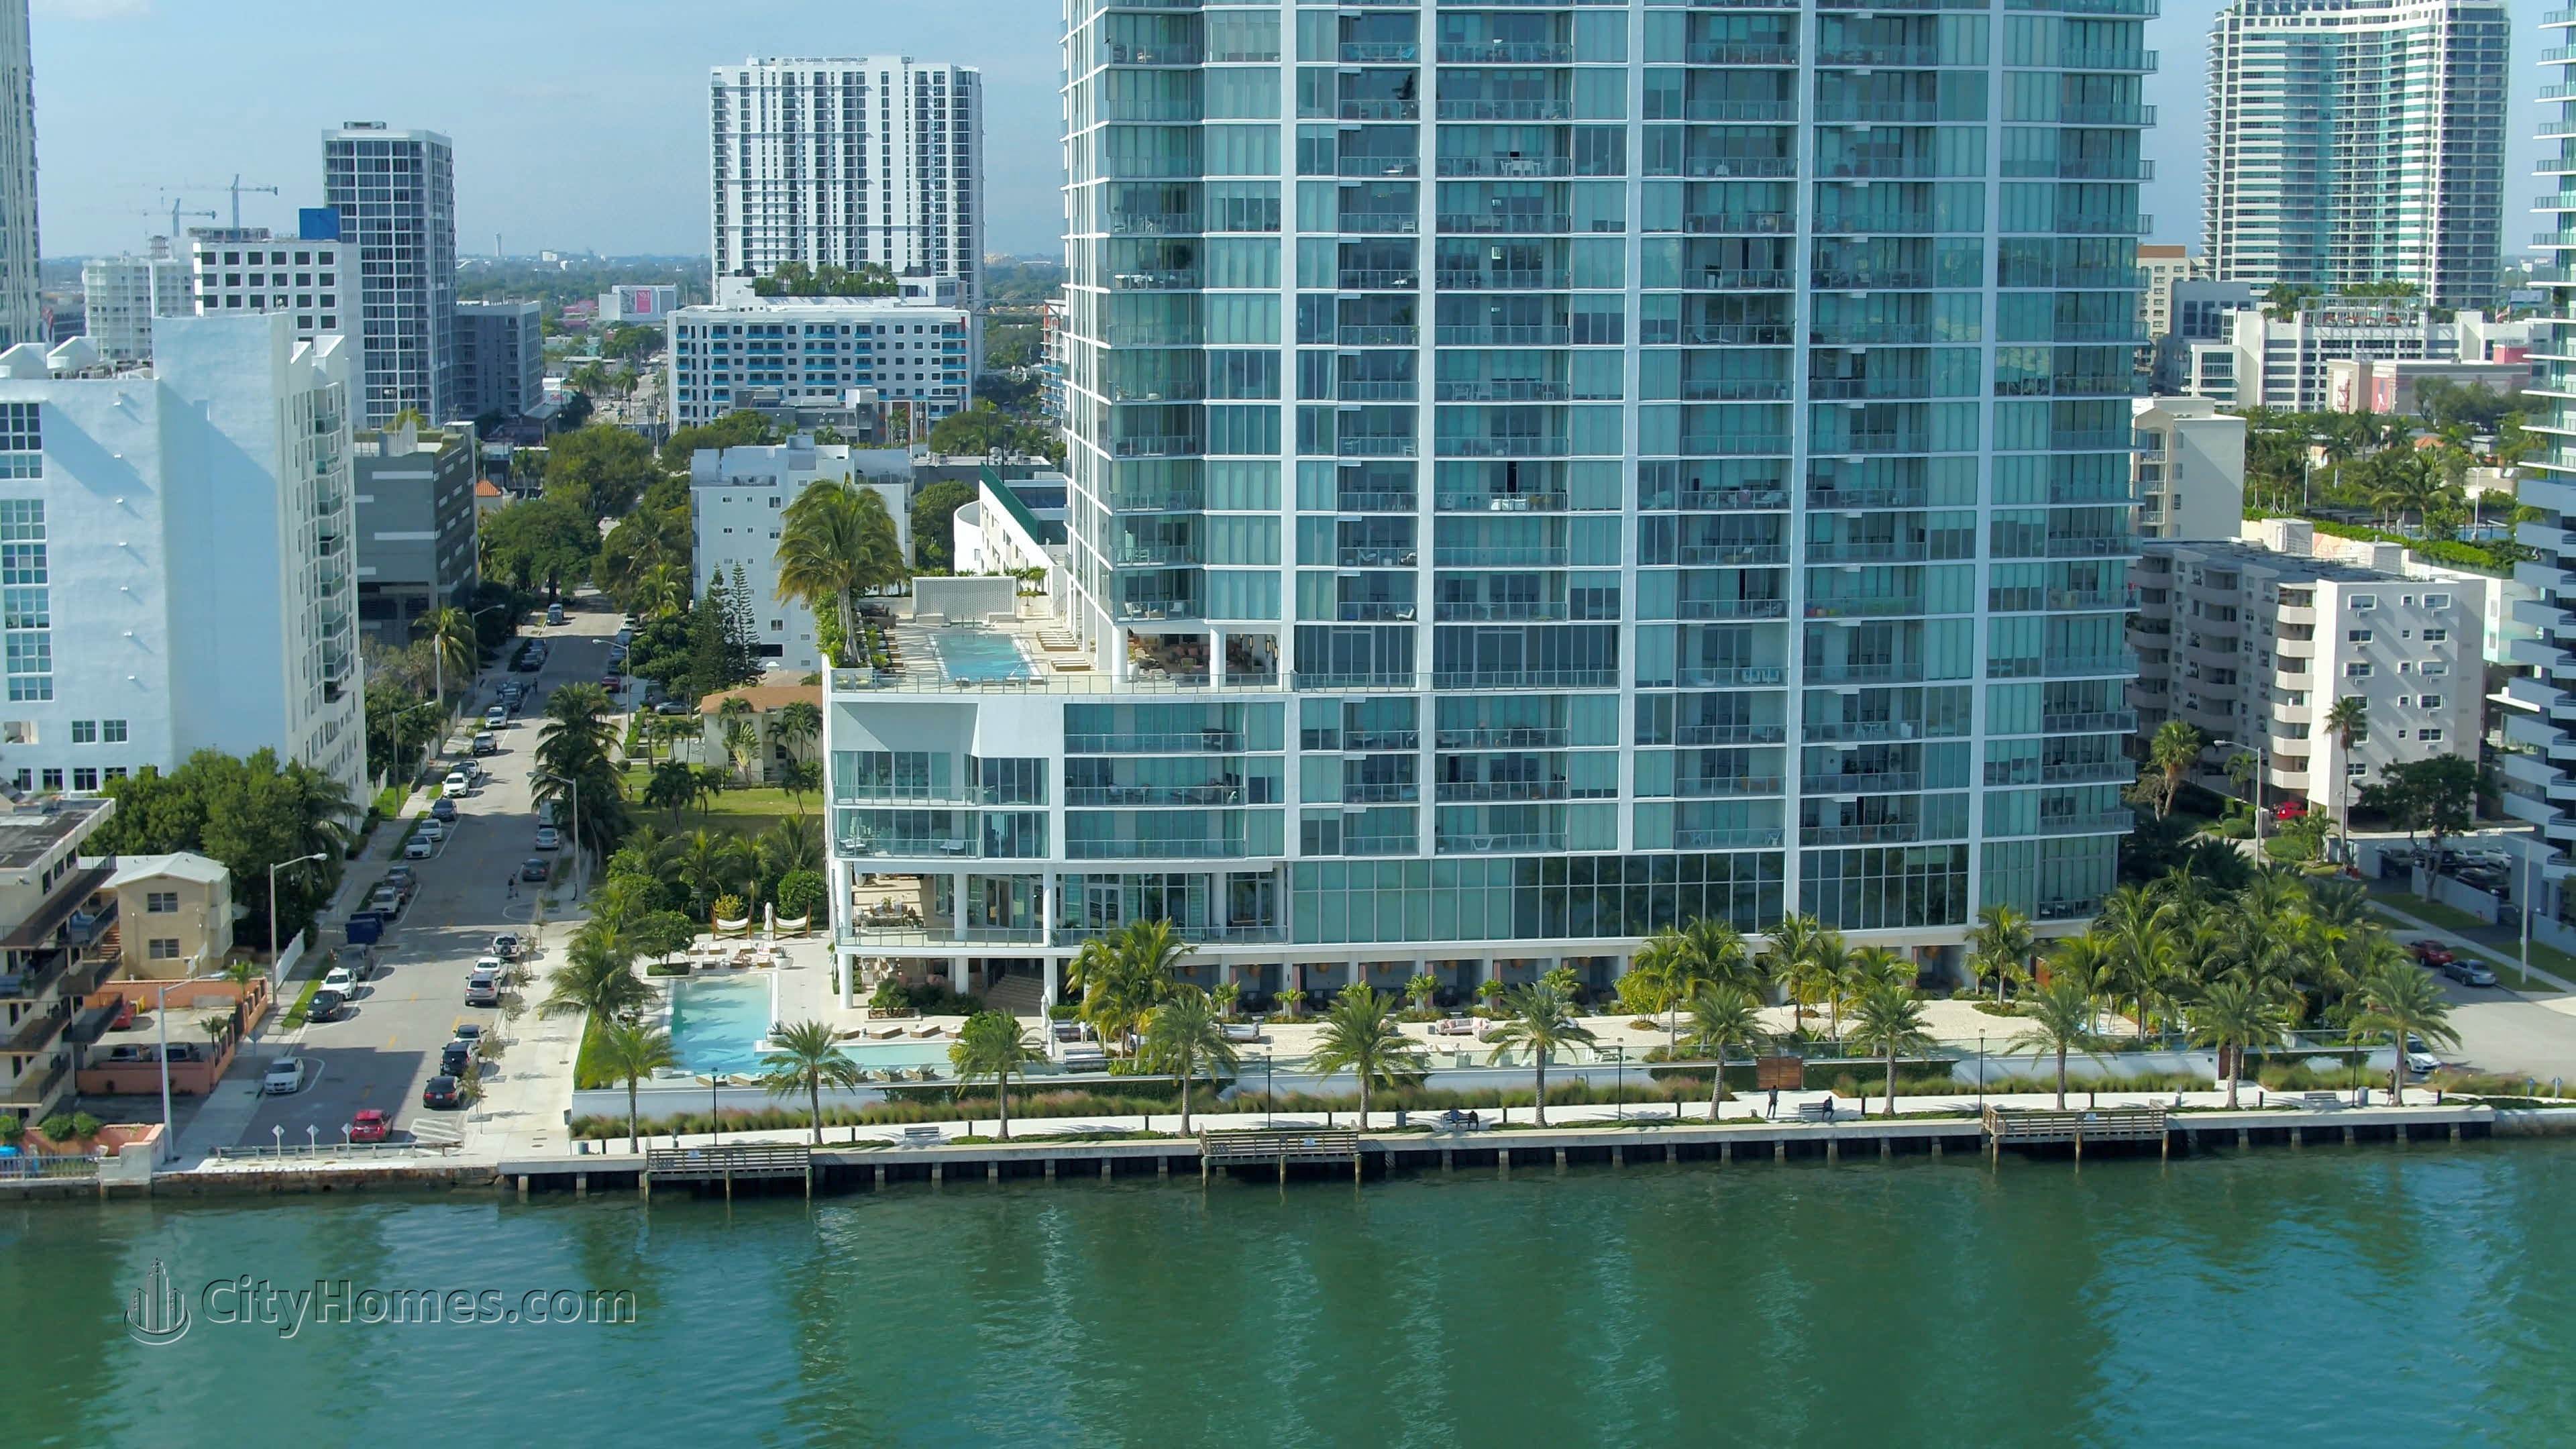 Biscayne Beach building at 2900 NE 7th Avenue, Edgewater, Miami, FL 33137